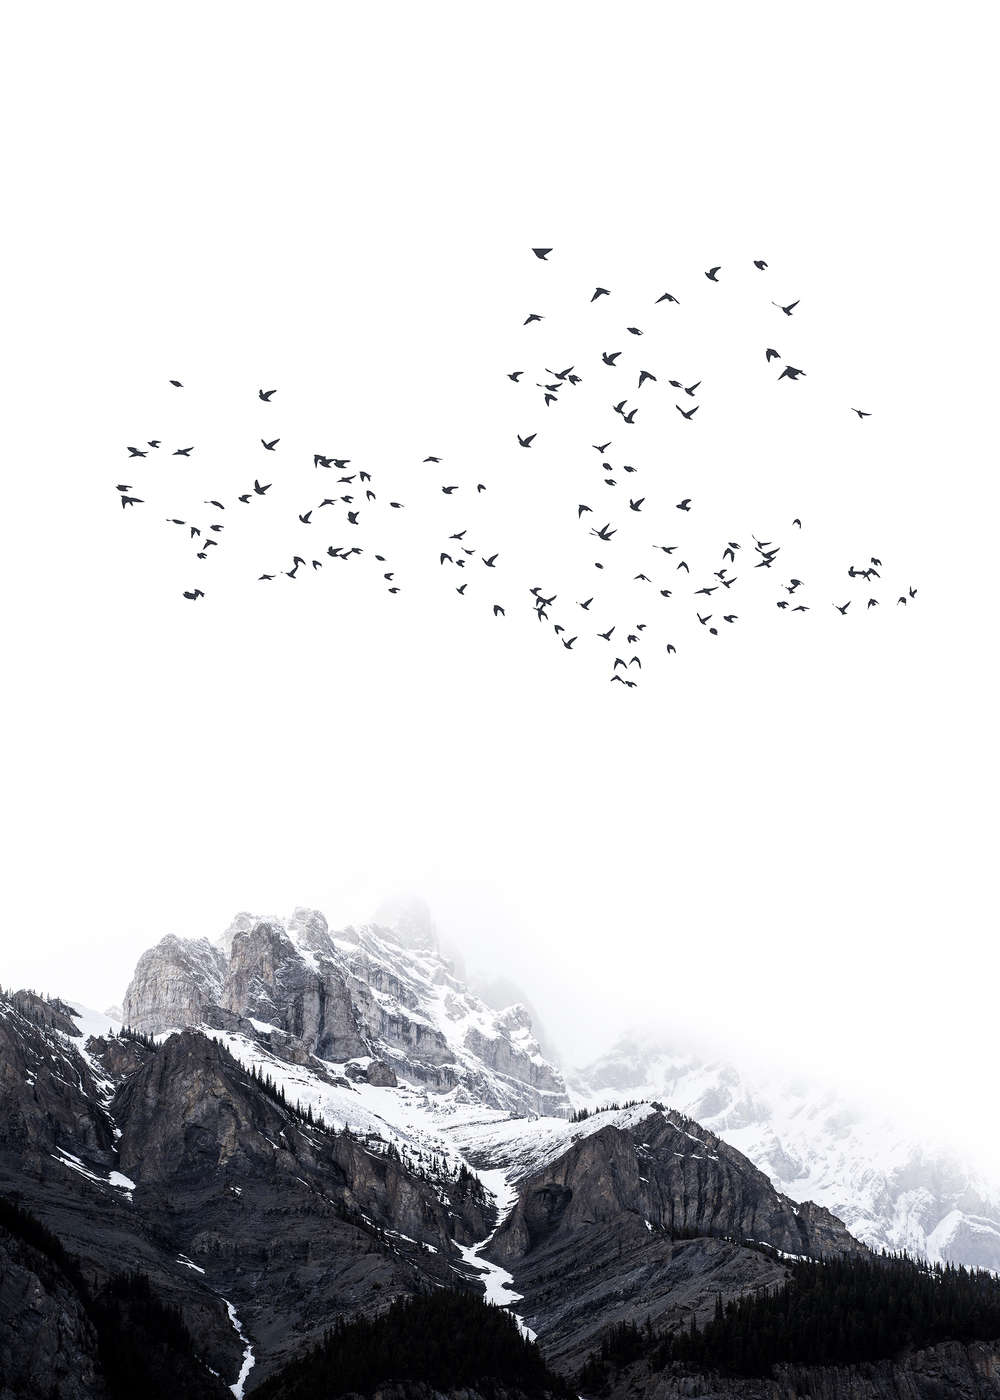             Landscape mural snowy mountains & migratory birds
        